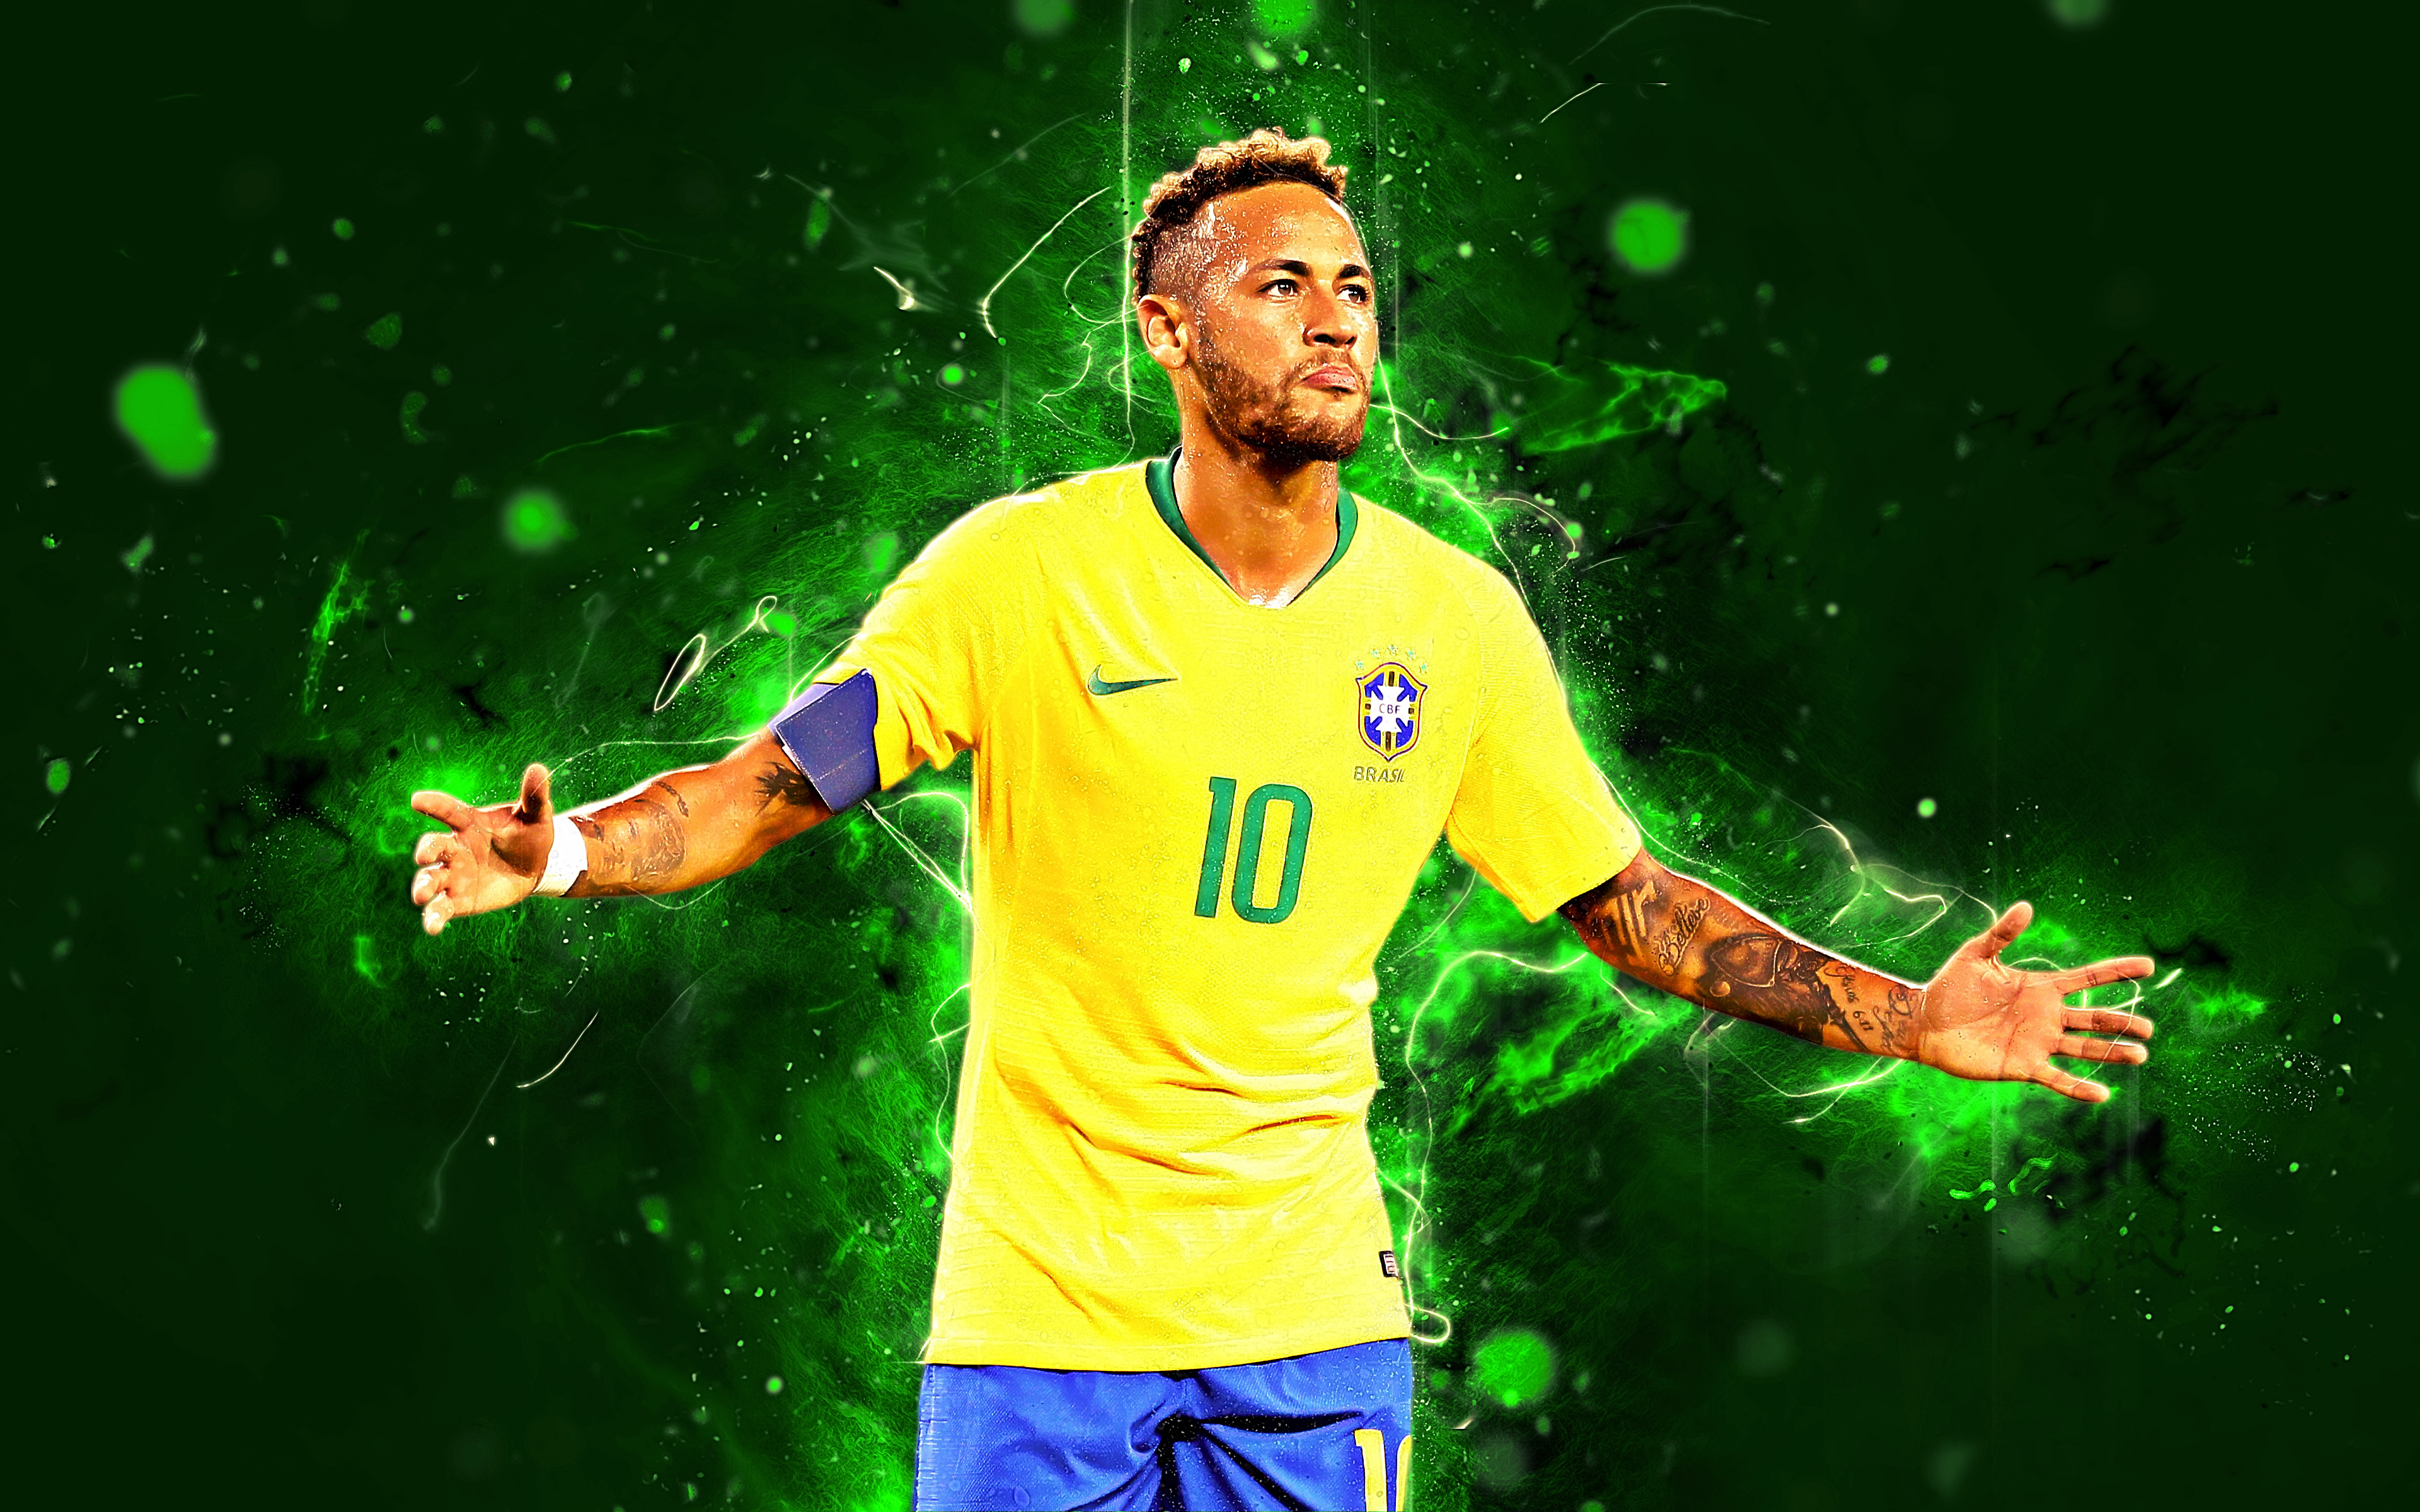 Neymar Brazil Wallpapers